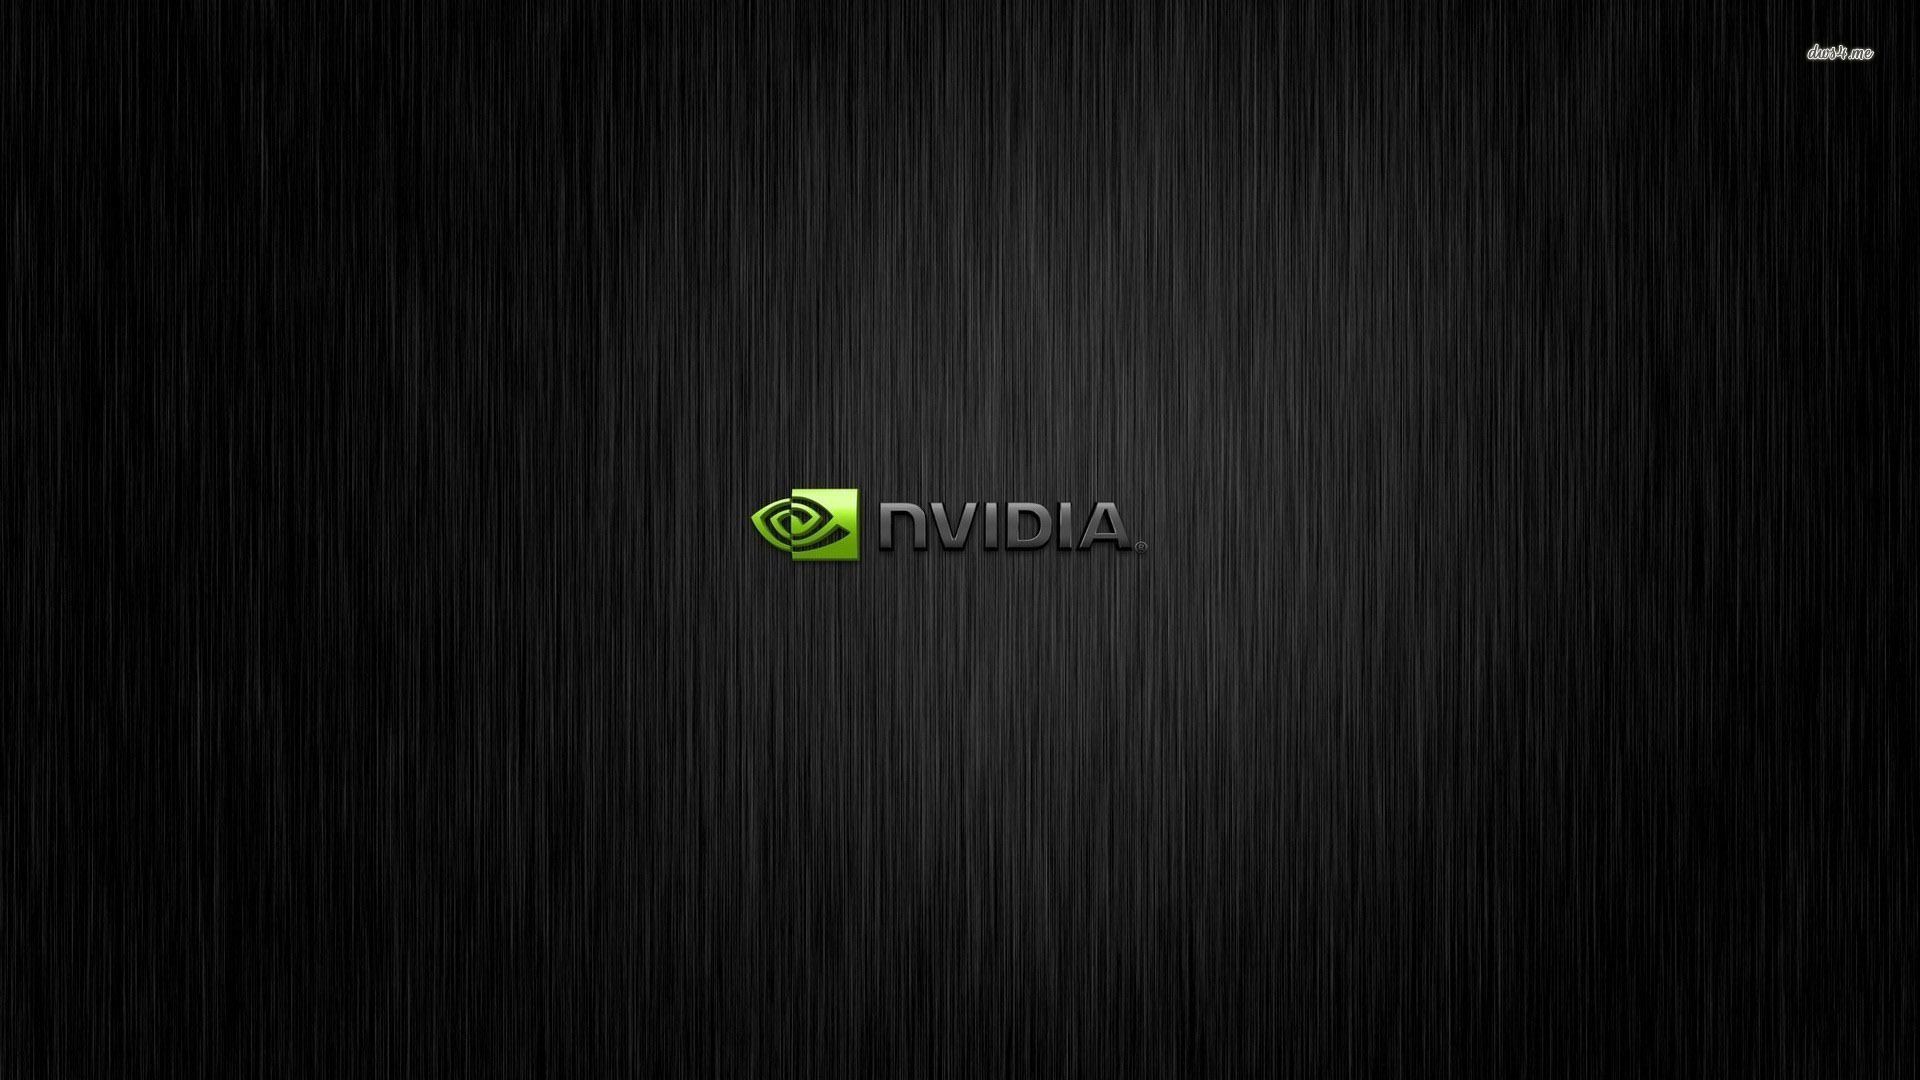 Nvidia wallpaper - Computer wallpapers - #28484